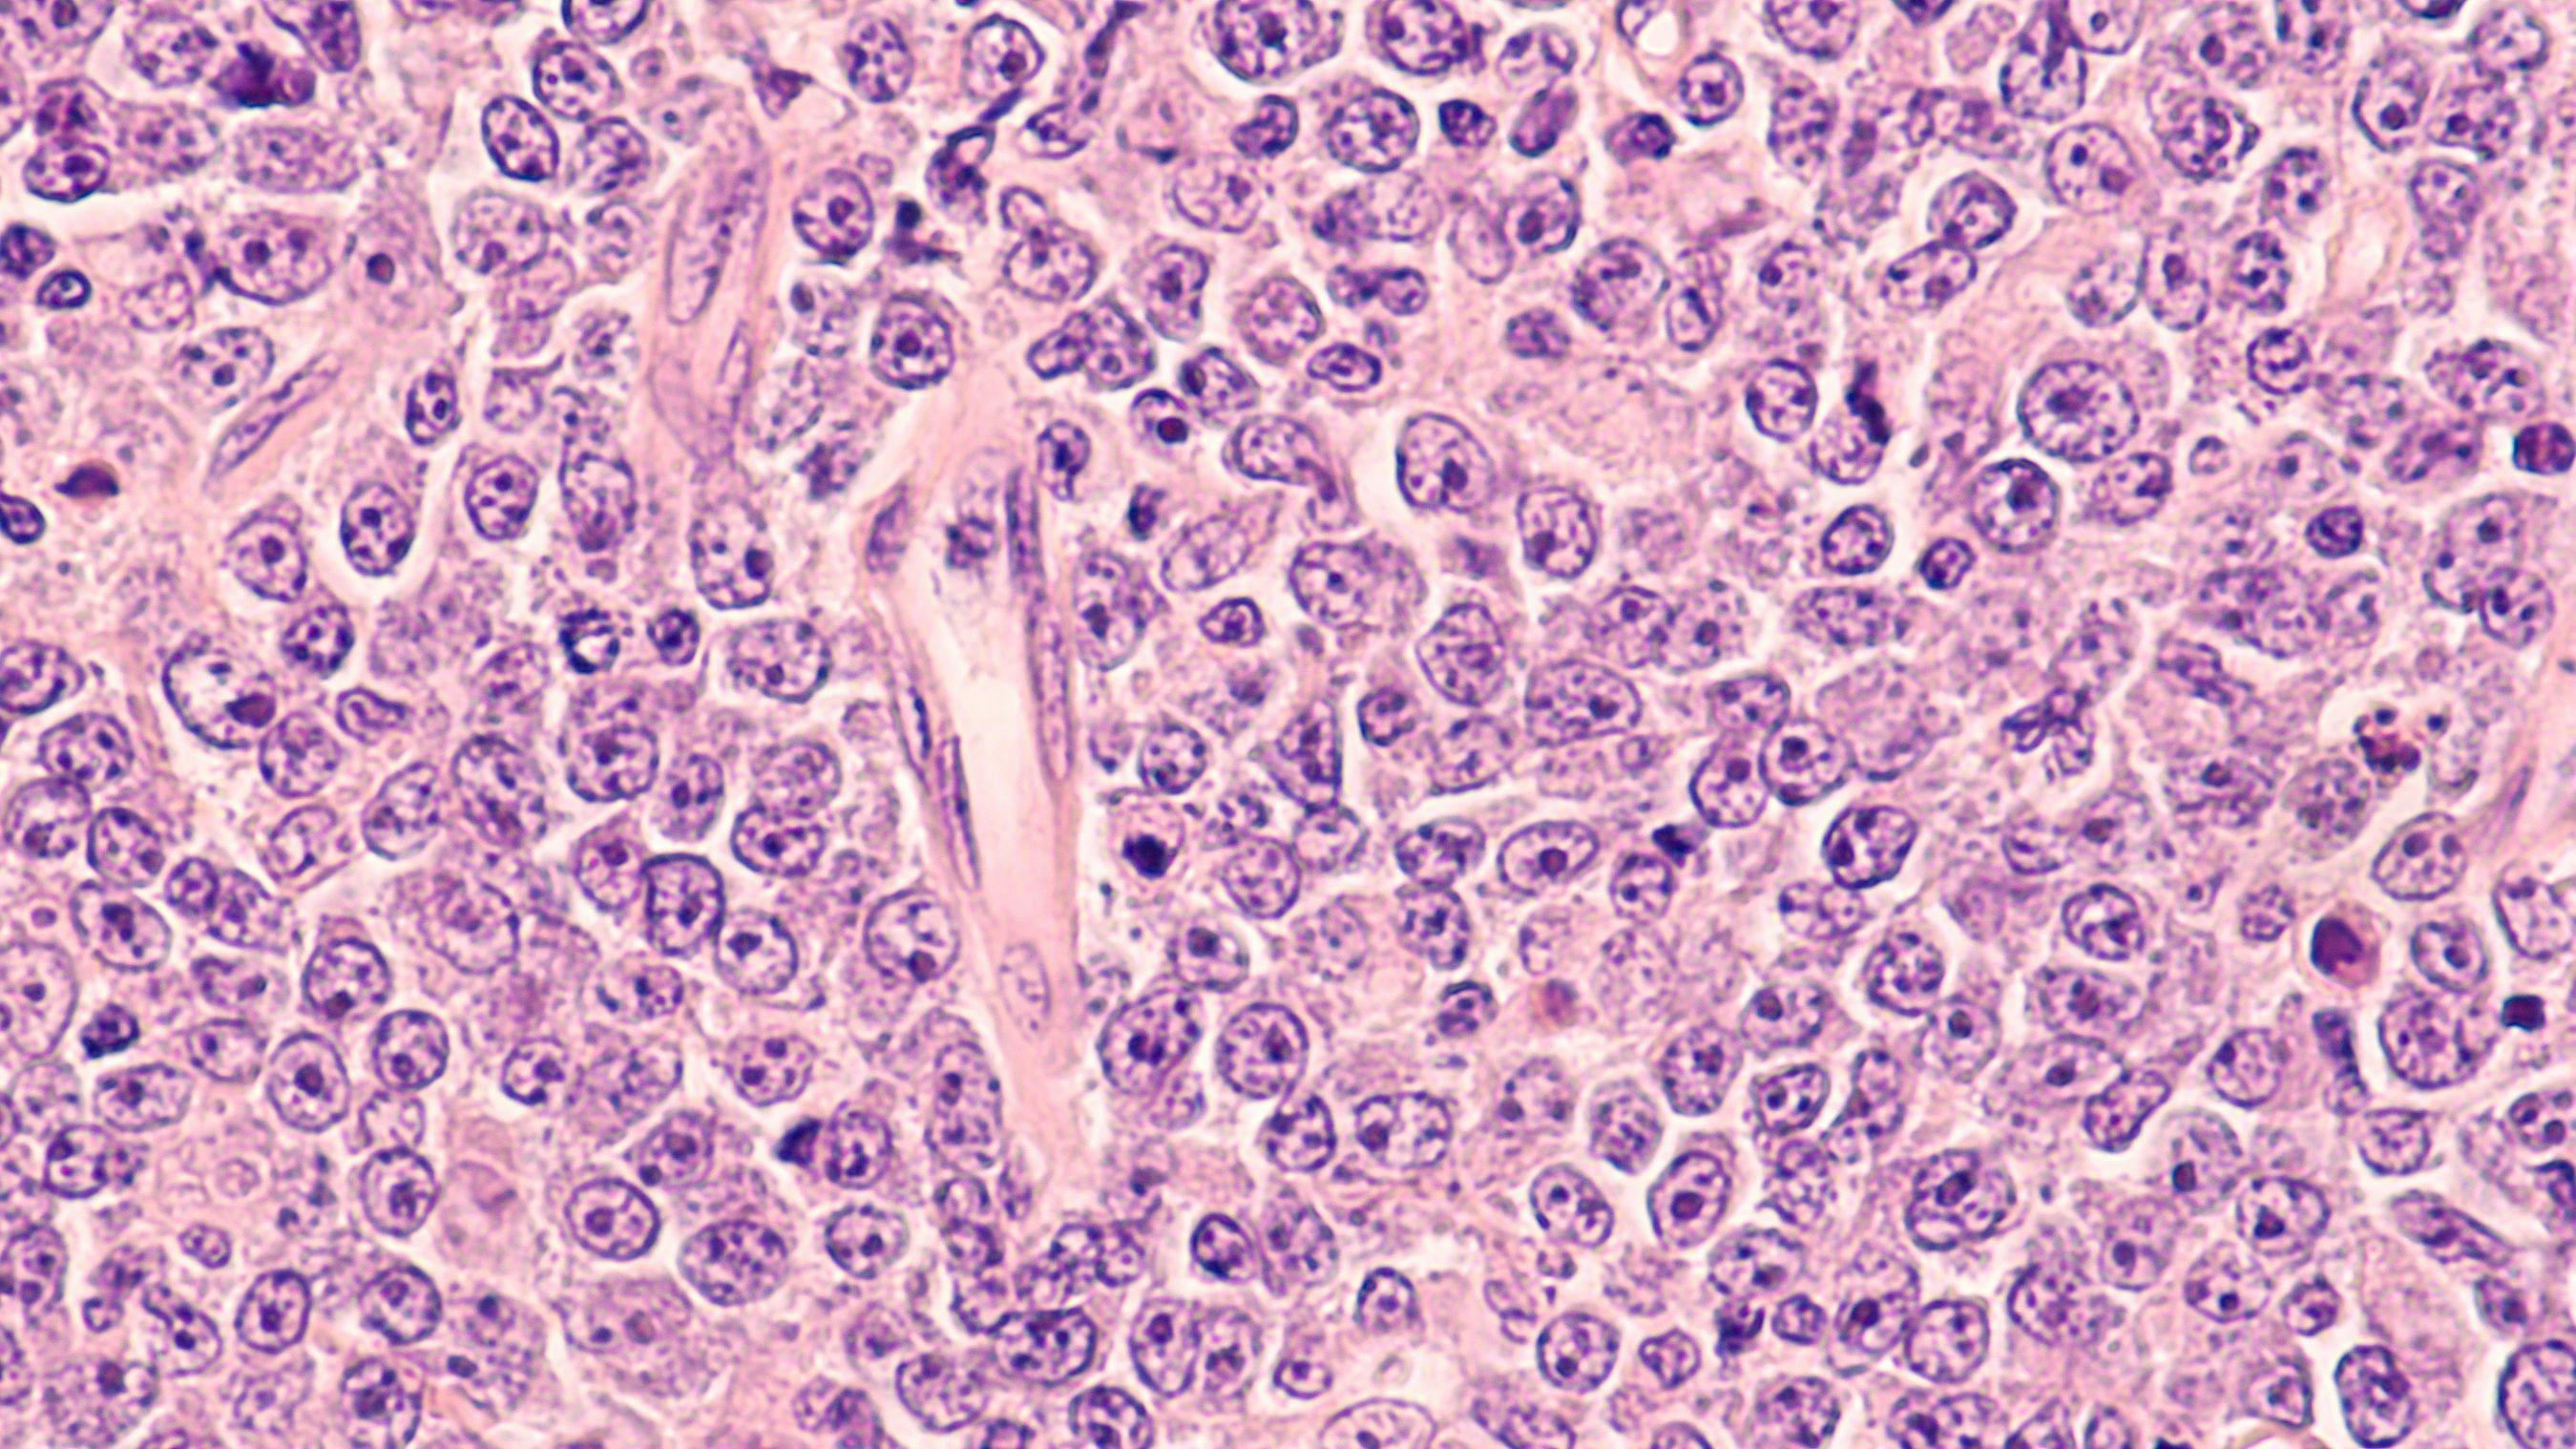 Photomicrograph of a diffuse large B-cell lymphoma (DLBCL) a type of non-Hodgkin lymphoma | Image Credit: David A Litman - stock.adobe.com